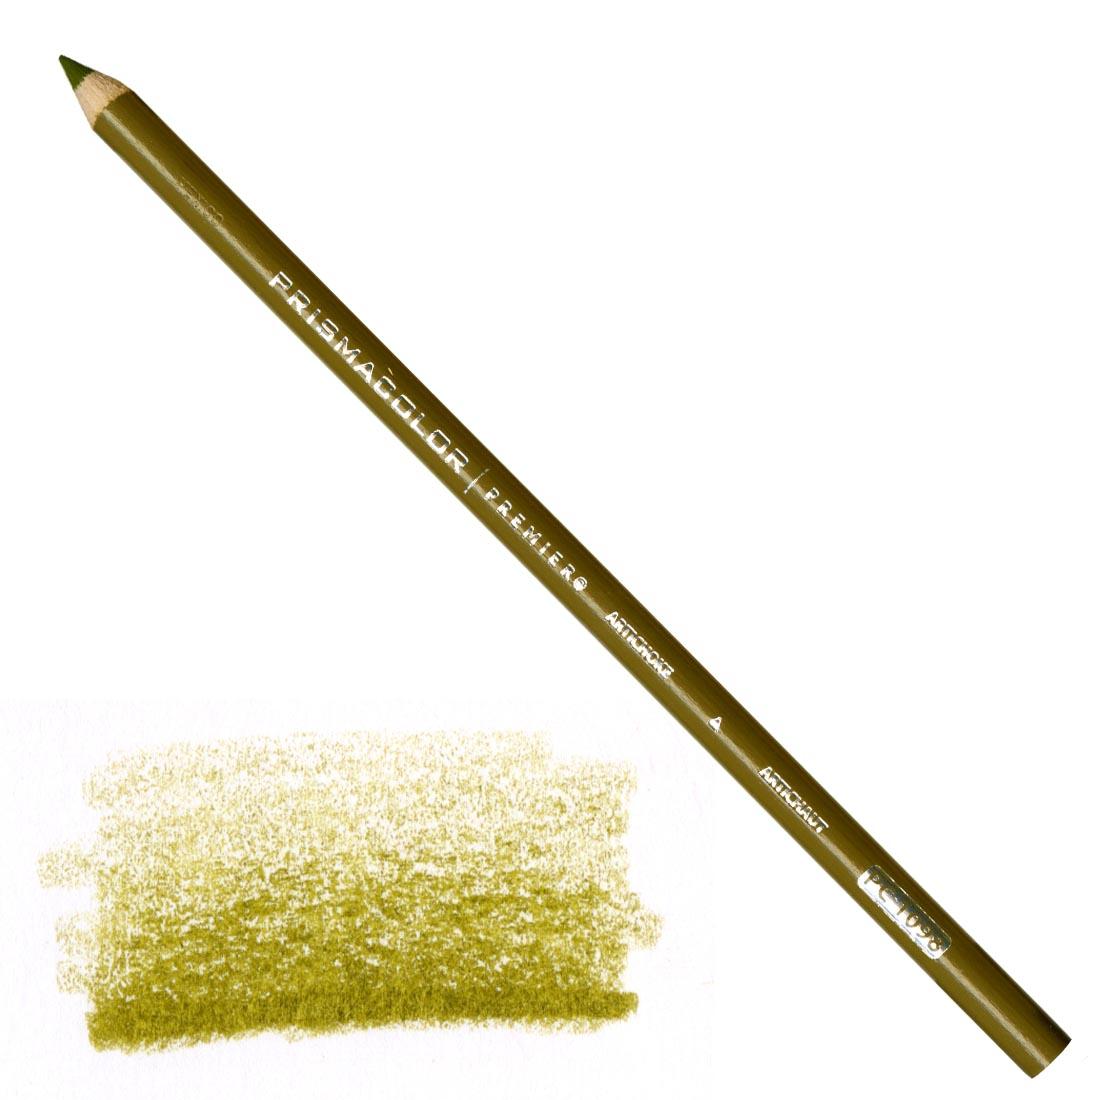 Artichoke Prismacolor Premier Colored Pencil with a sample colored swatch